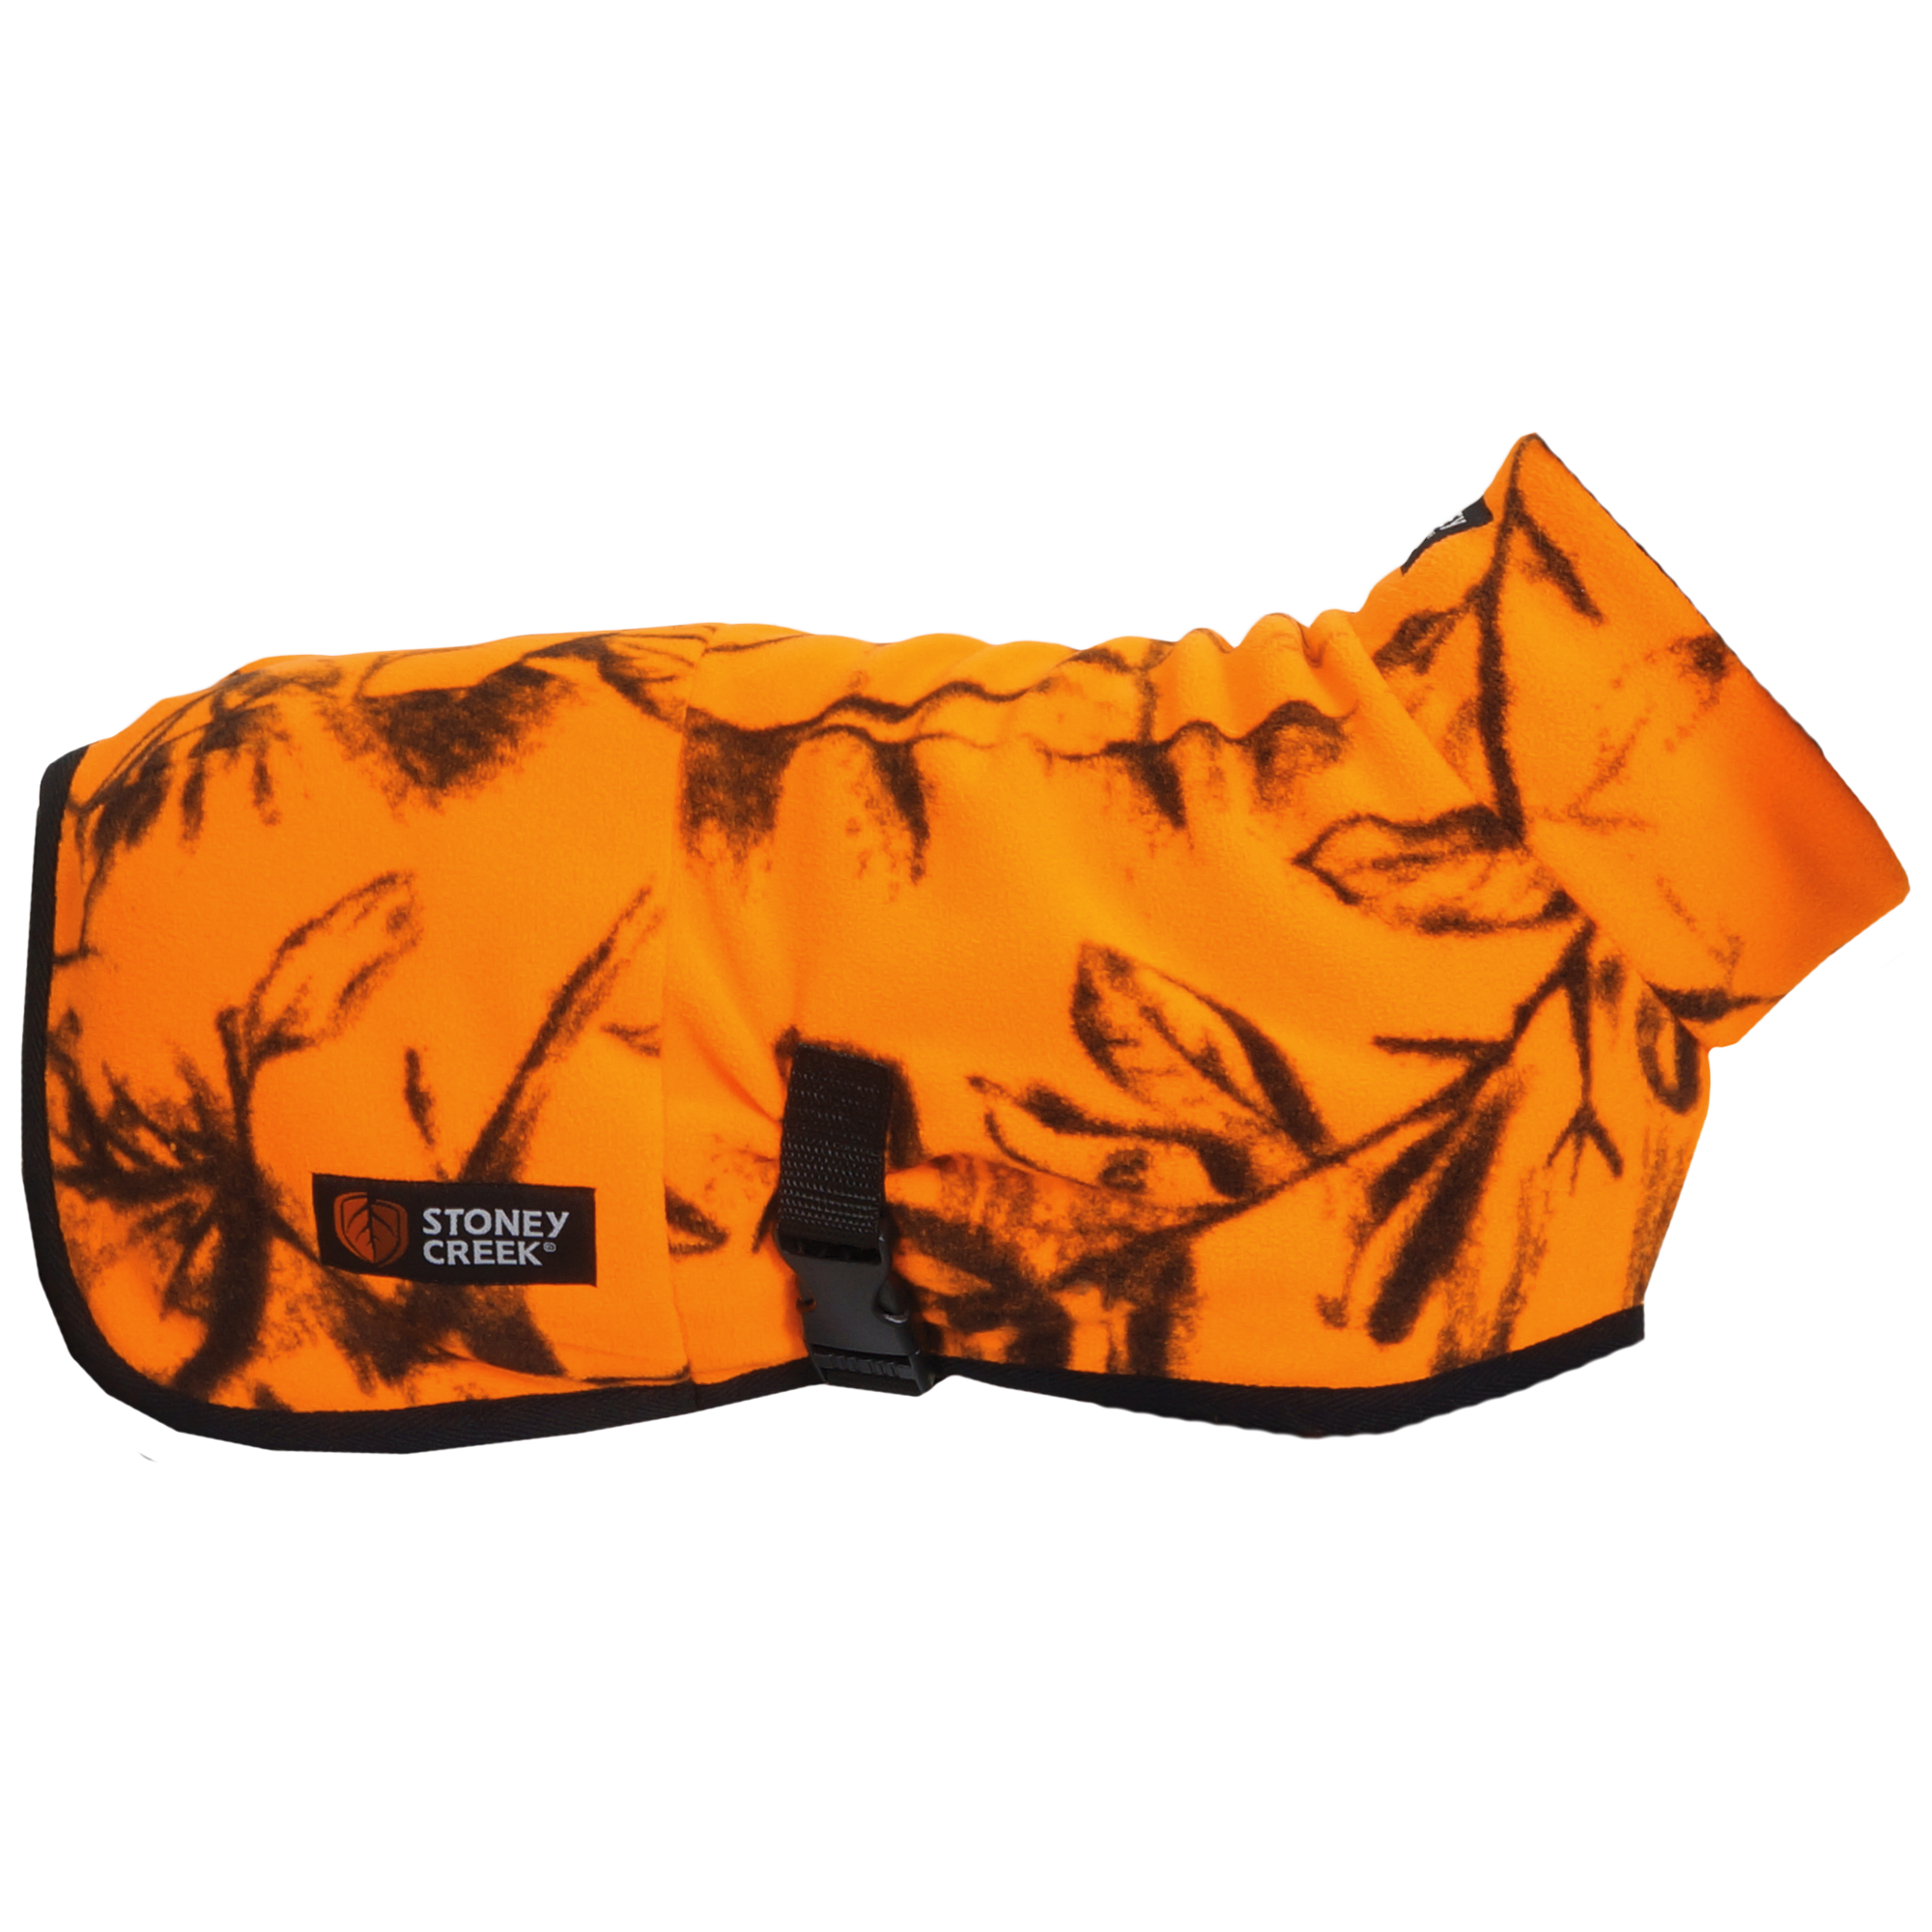 Stoney Creek Jones Dog Coat Fleece - Blaze Orange - S / BLAZE ORANGE - Mansfield Hunting & Fishing - Products to prepare for Corona Virus